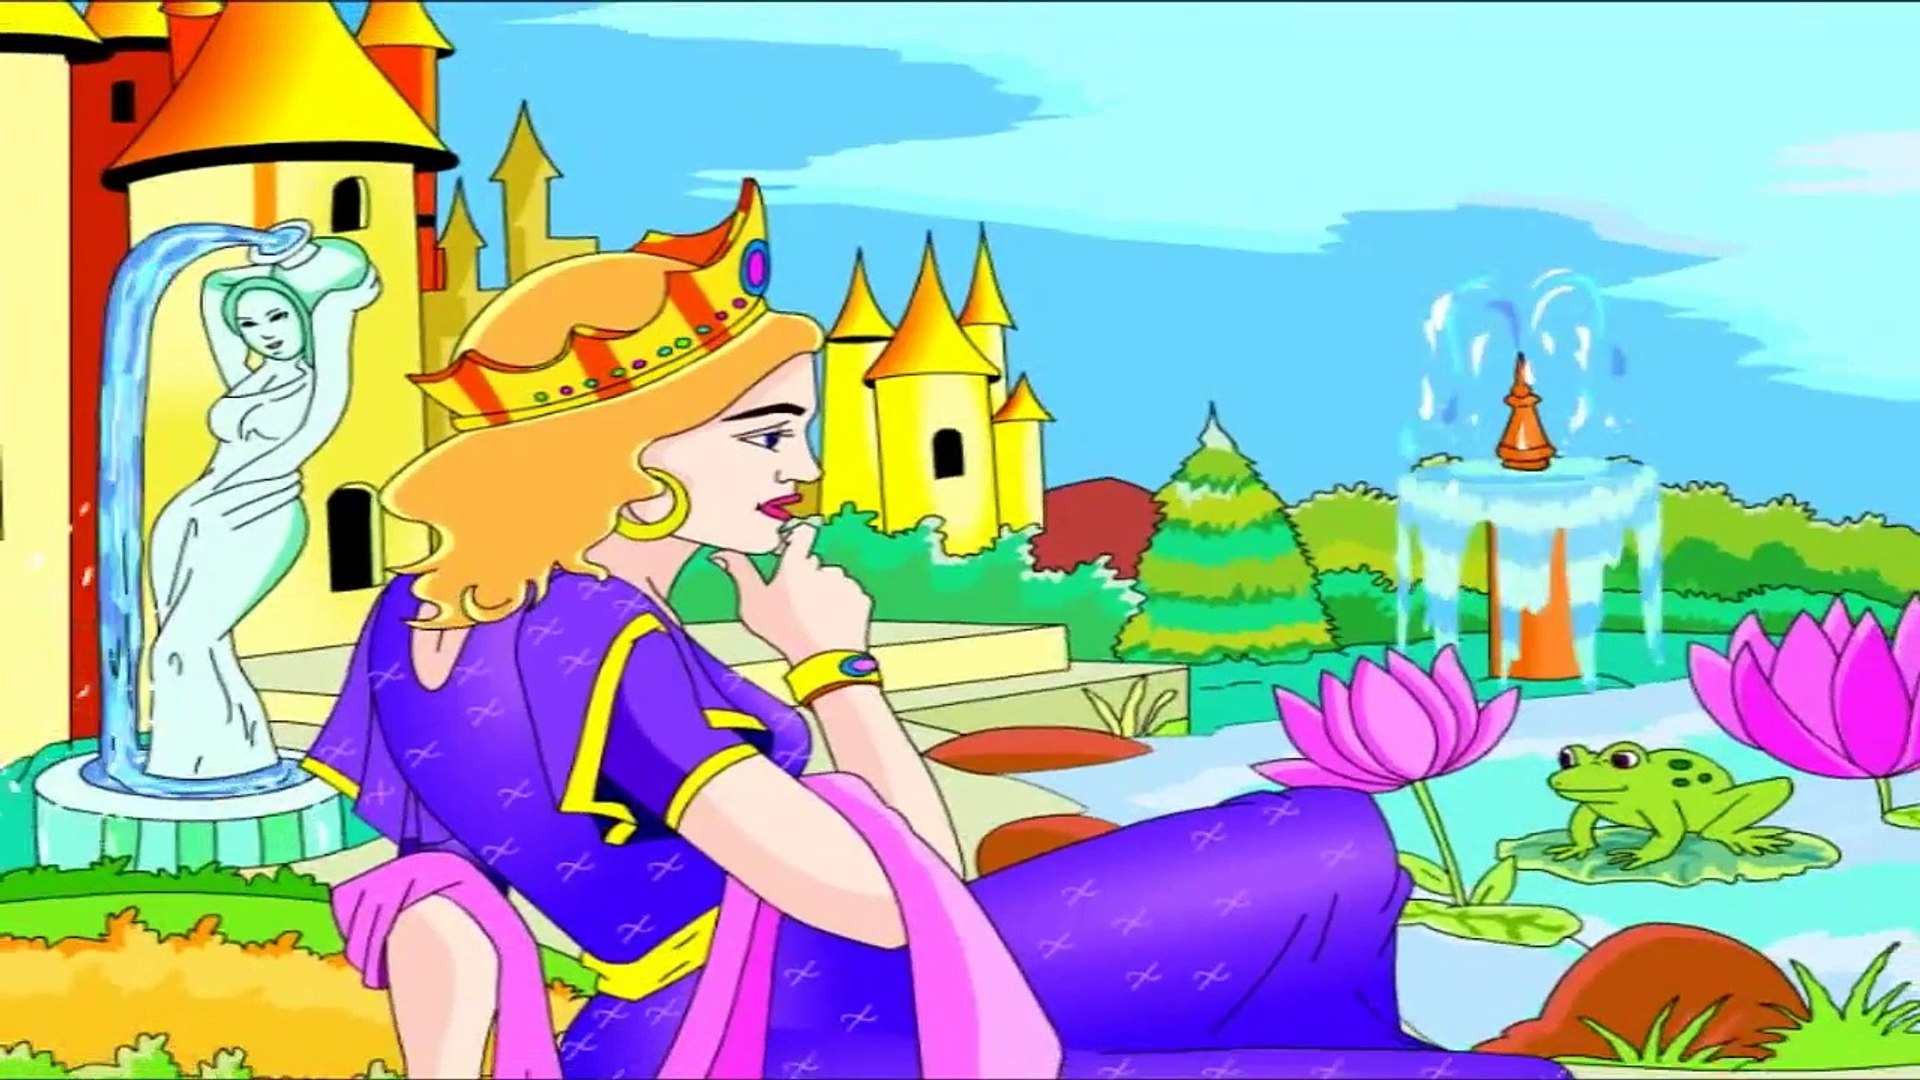 Sleeping Beauty ## Fairy Tales - Fantastic Animation For Kids Education